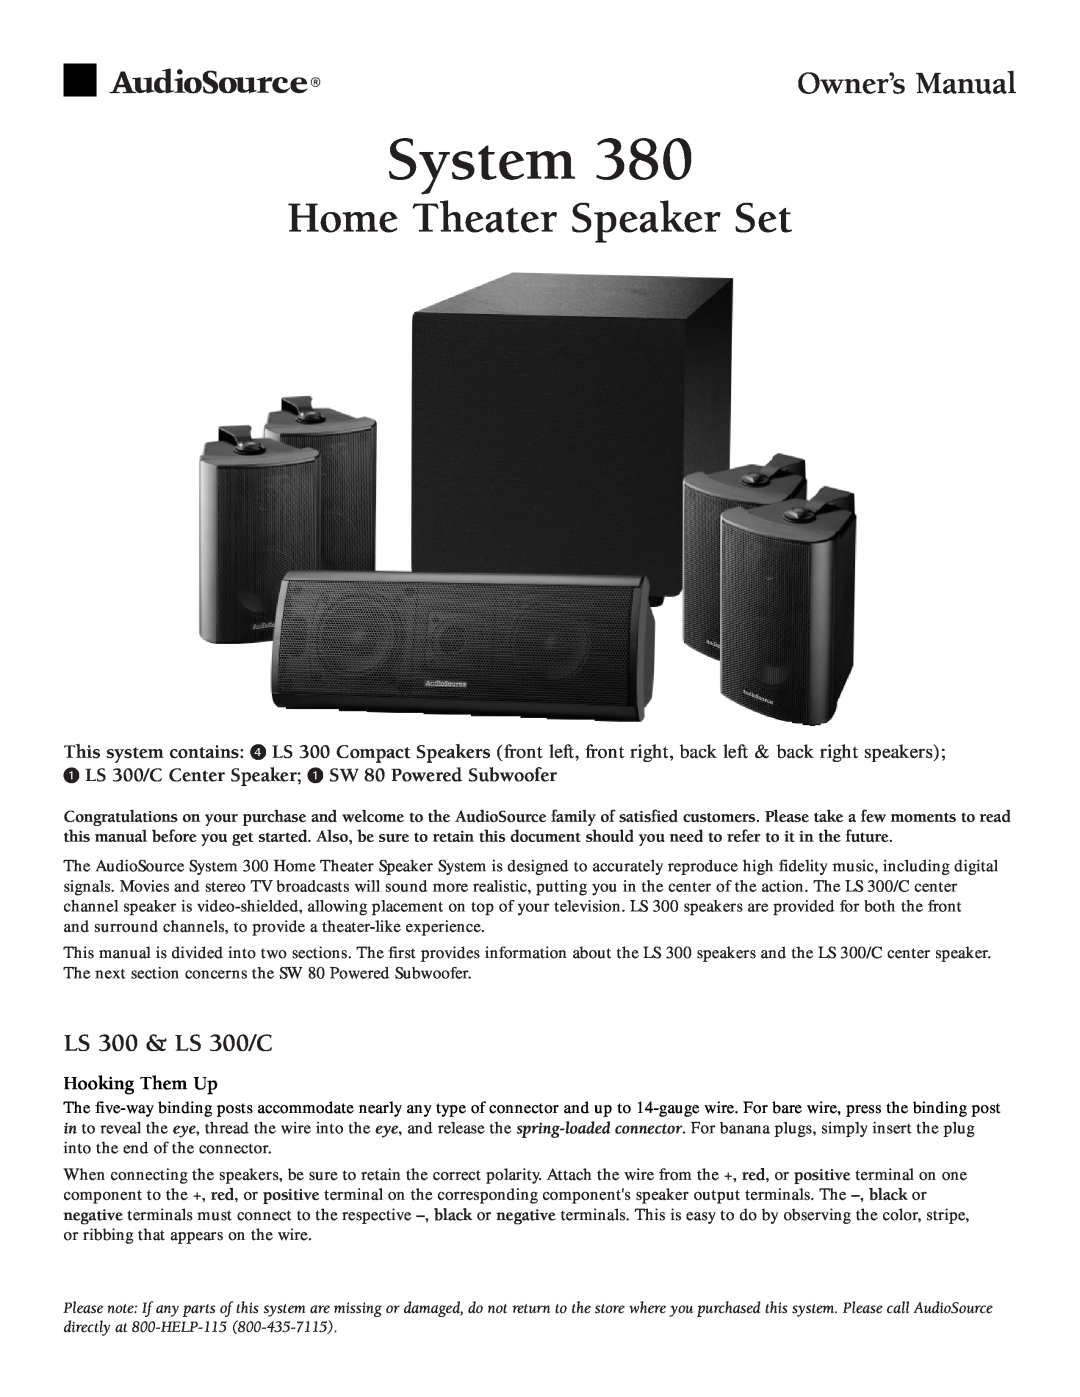 AudioSource SYSTEM 380 owner manual LS 300 & LS 300/C, LS 300/C Center Speaker SW 80 Powered Subwoofer, Hooking Them Up 